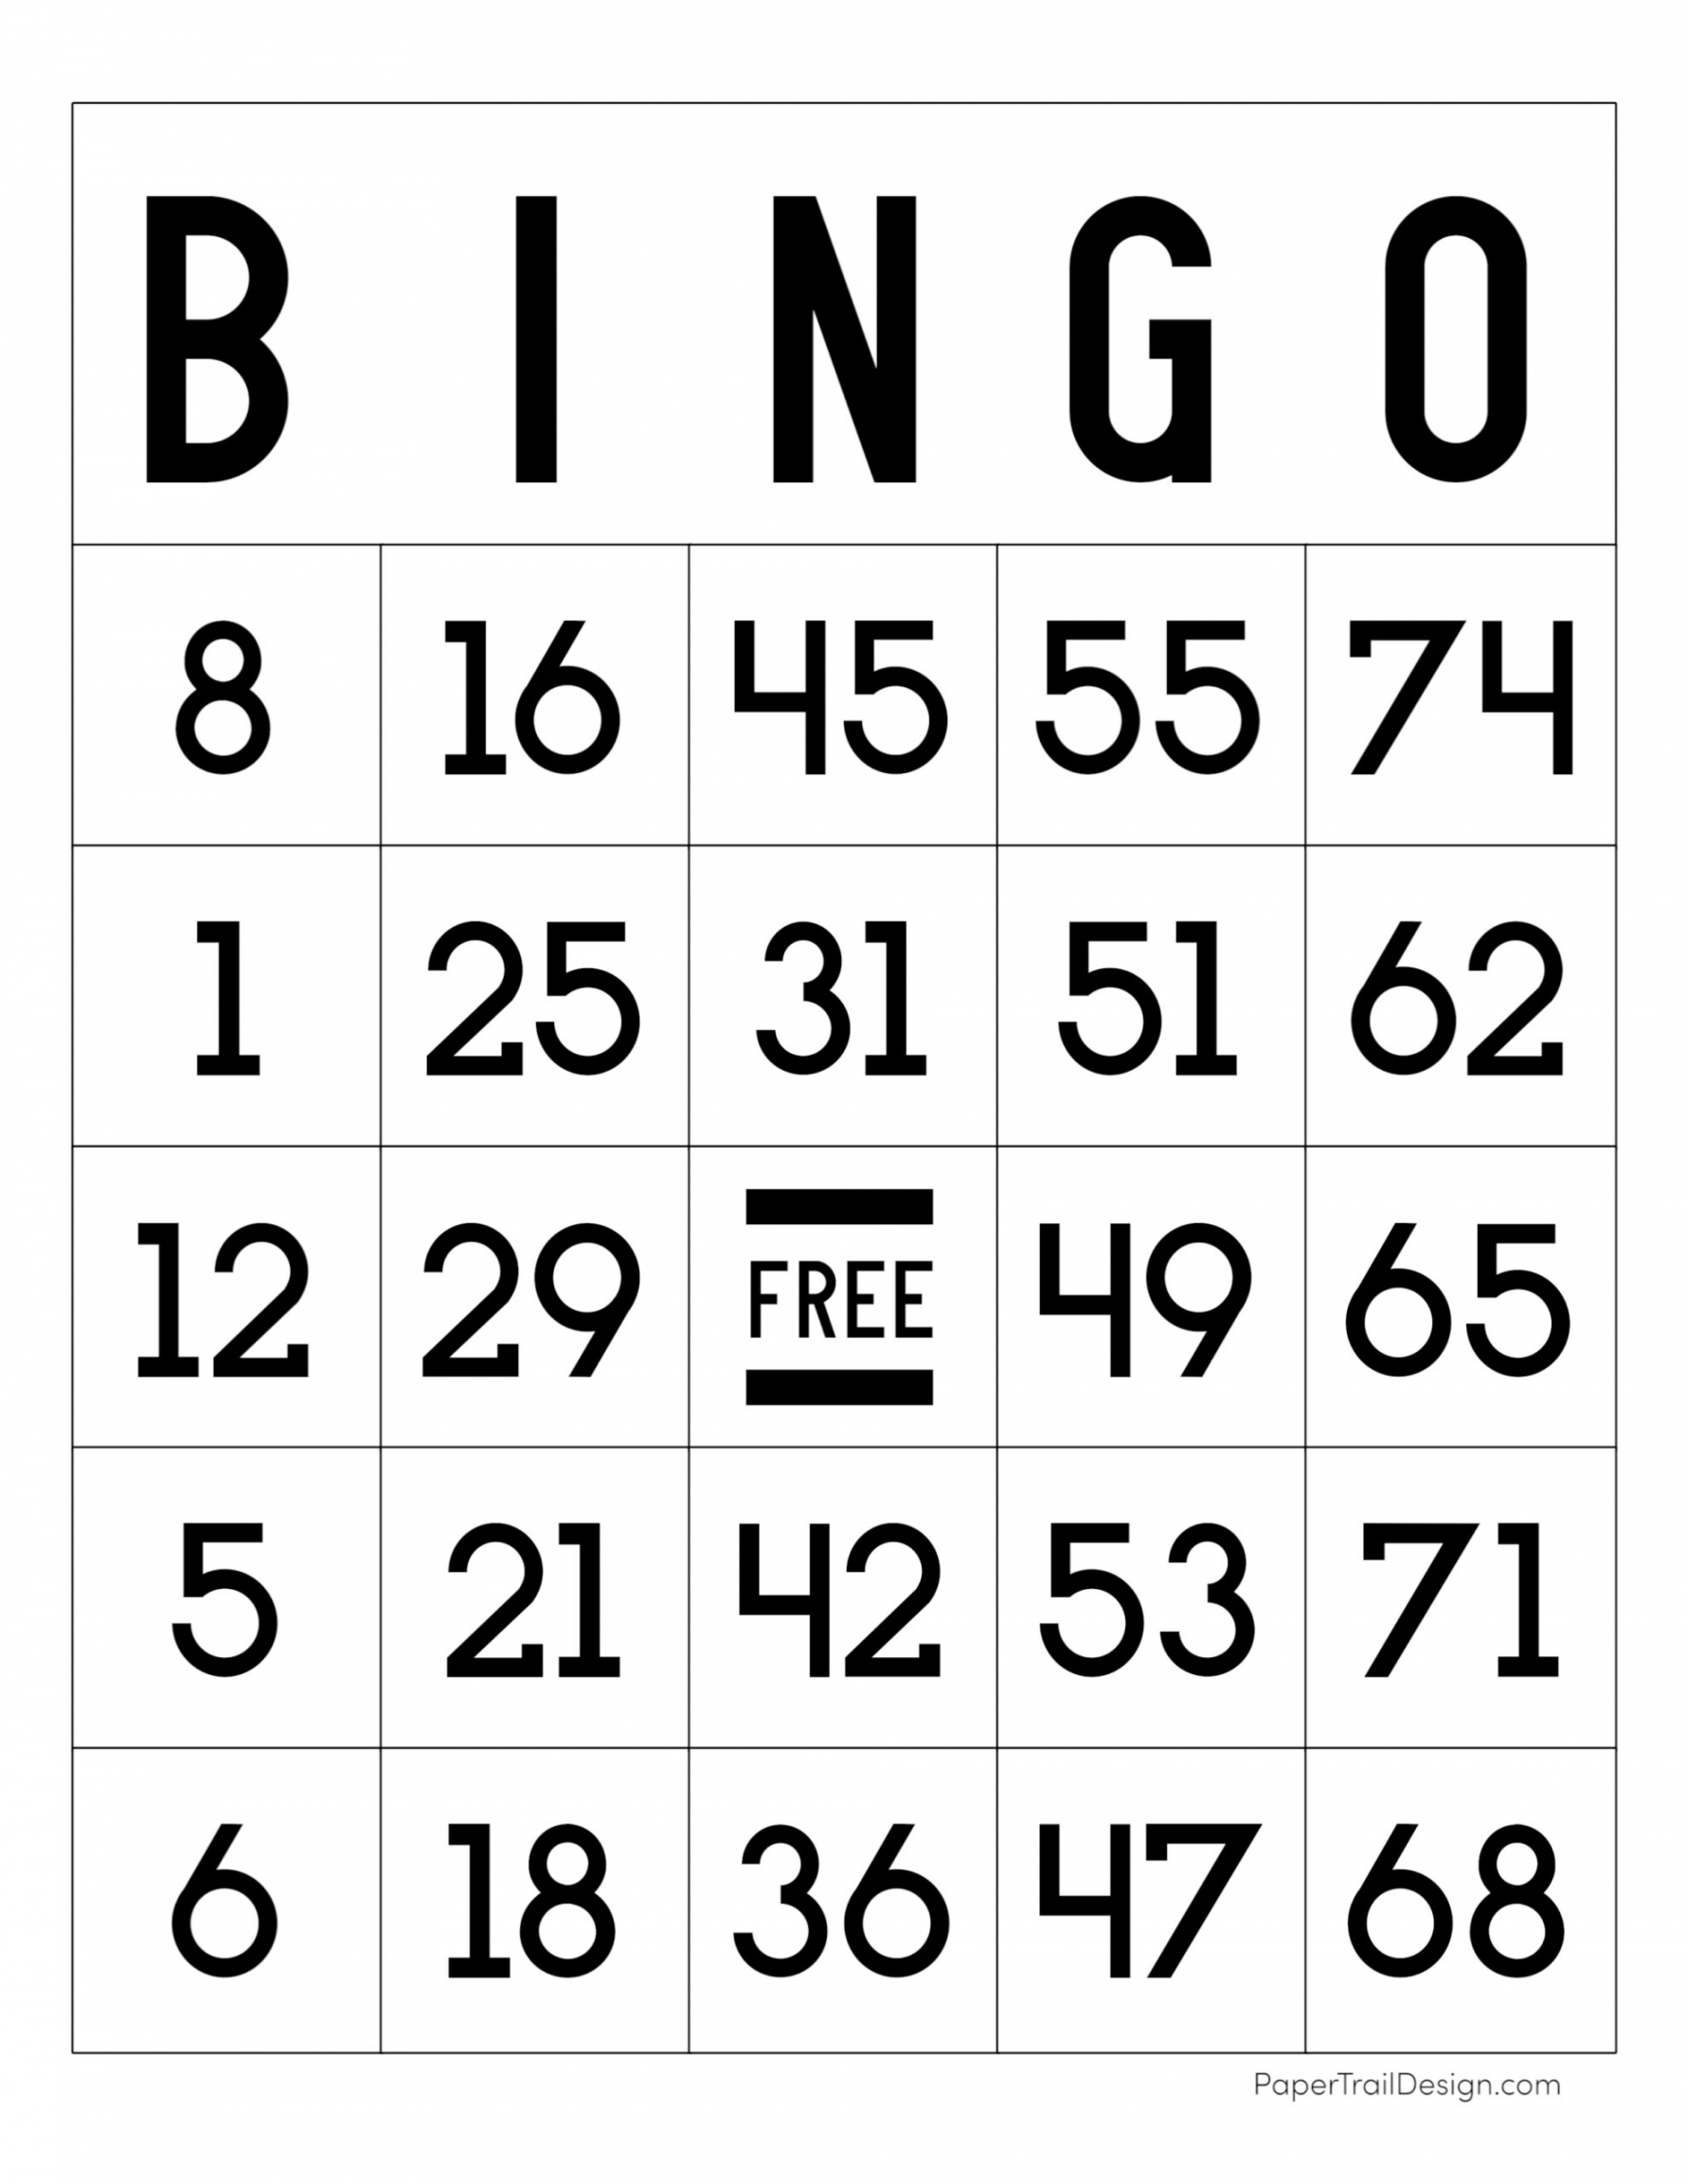 Free Bingo Cards Printable - Printable - Free Printable Bingo Cards - Paper Trail Design